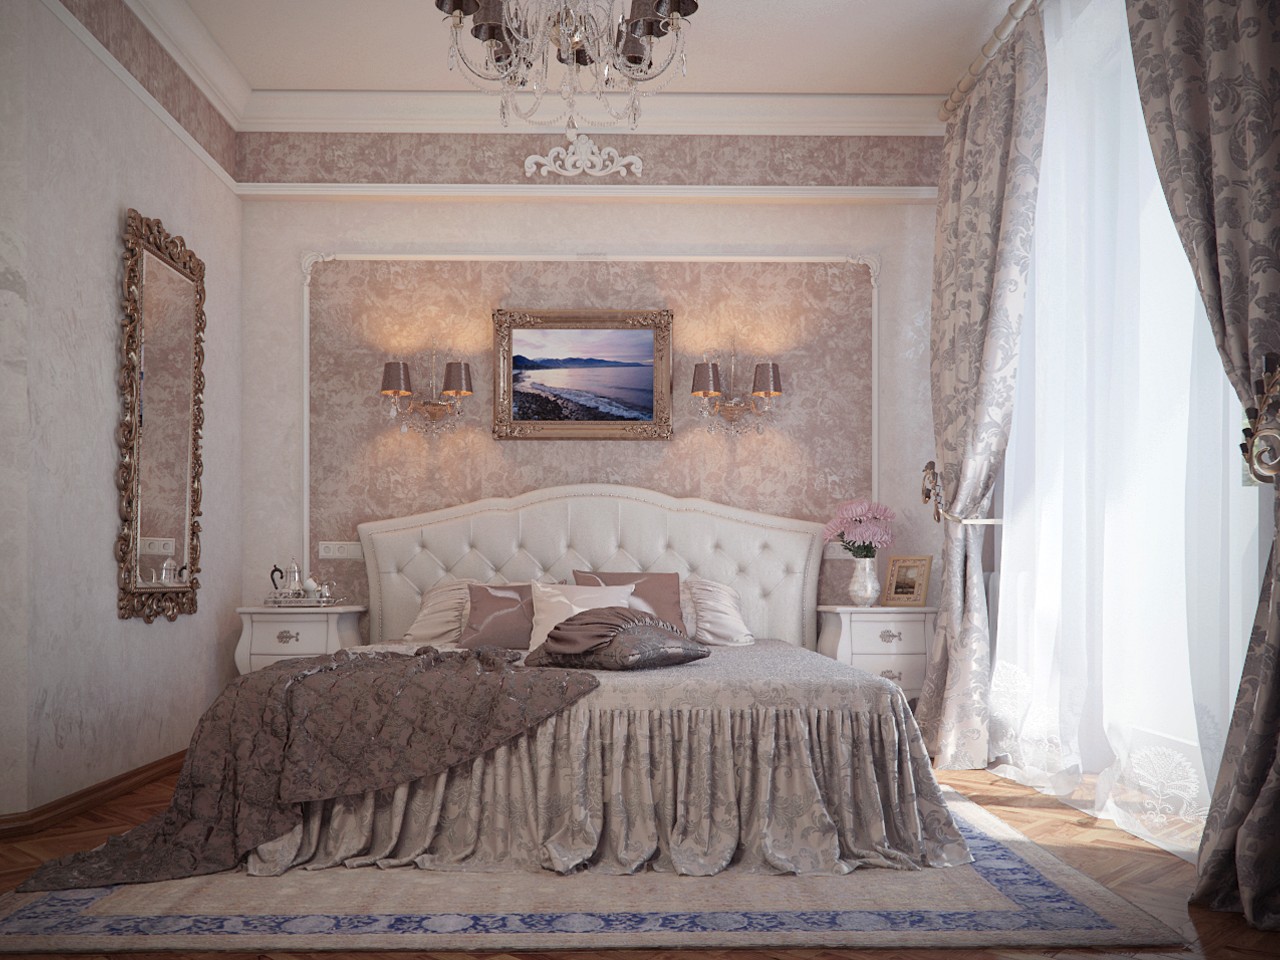 classic bedroom design